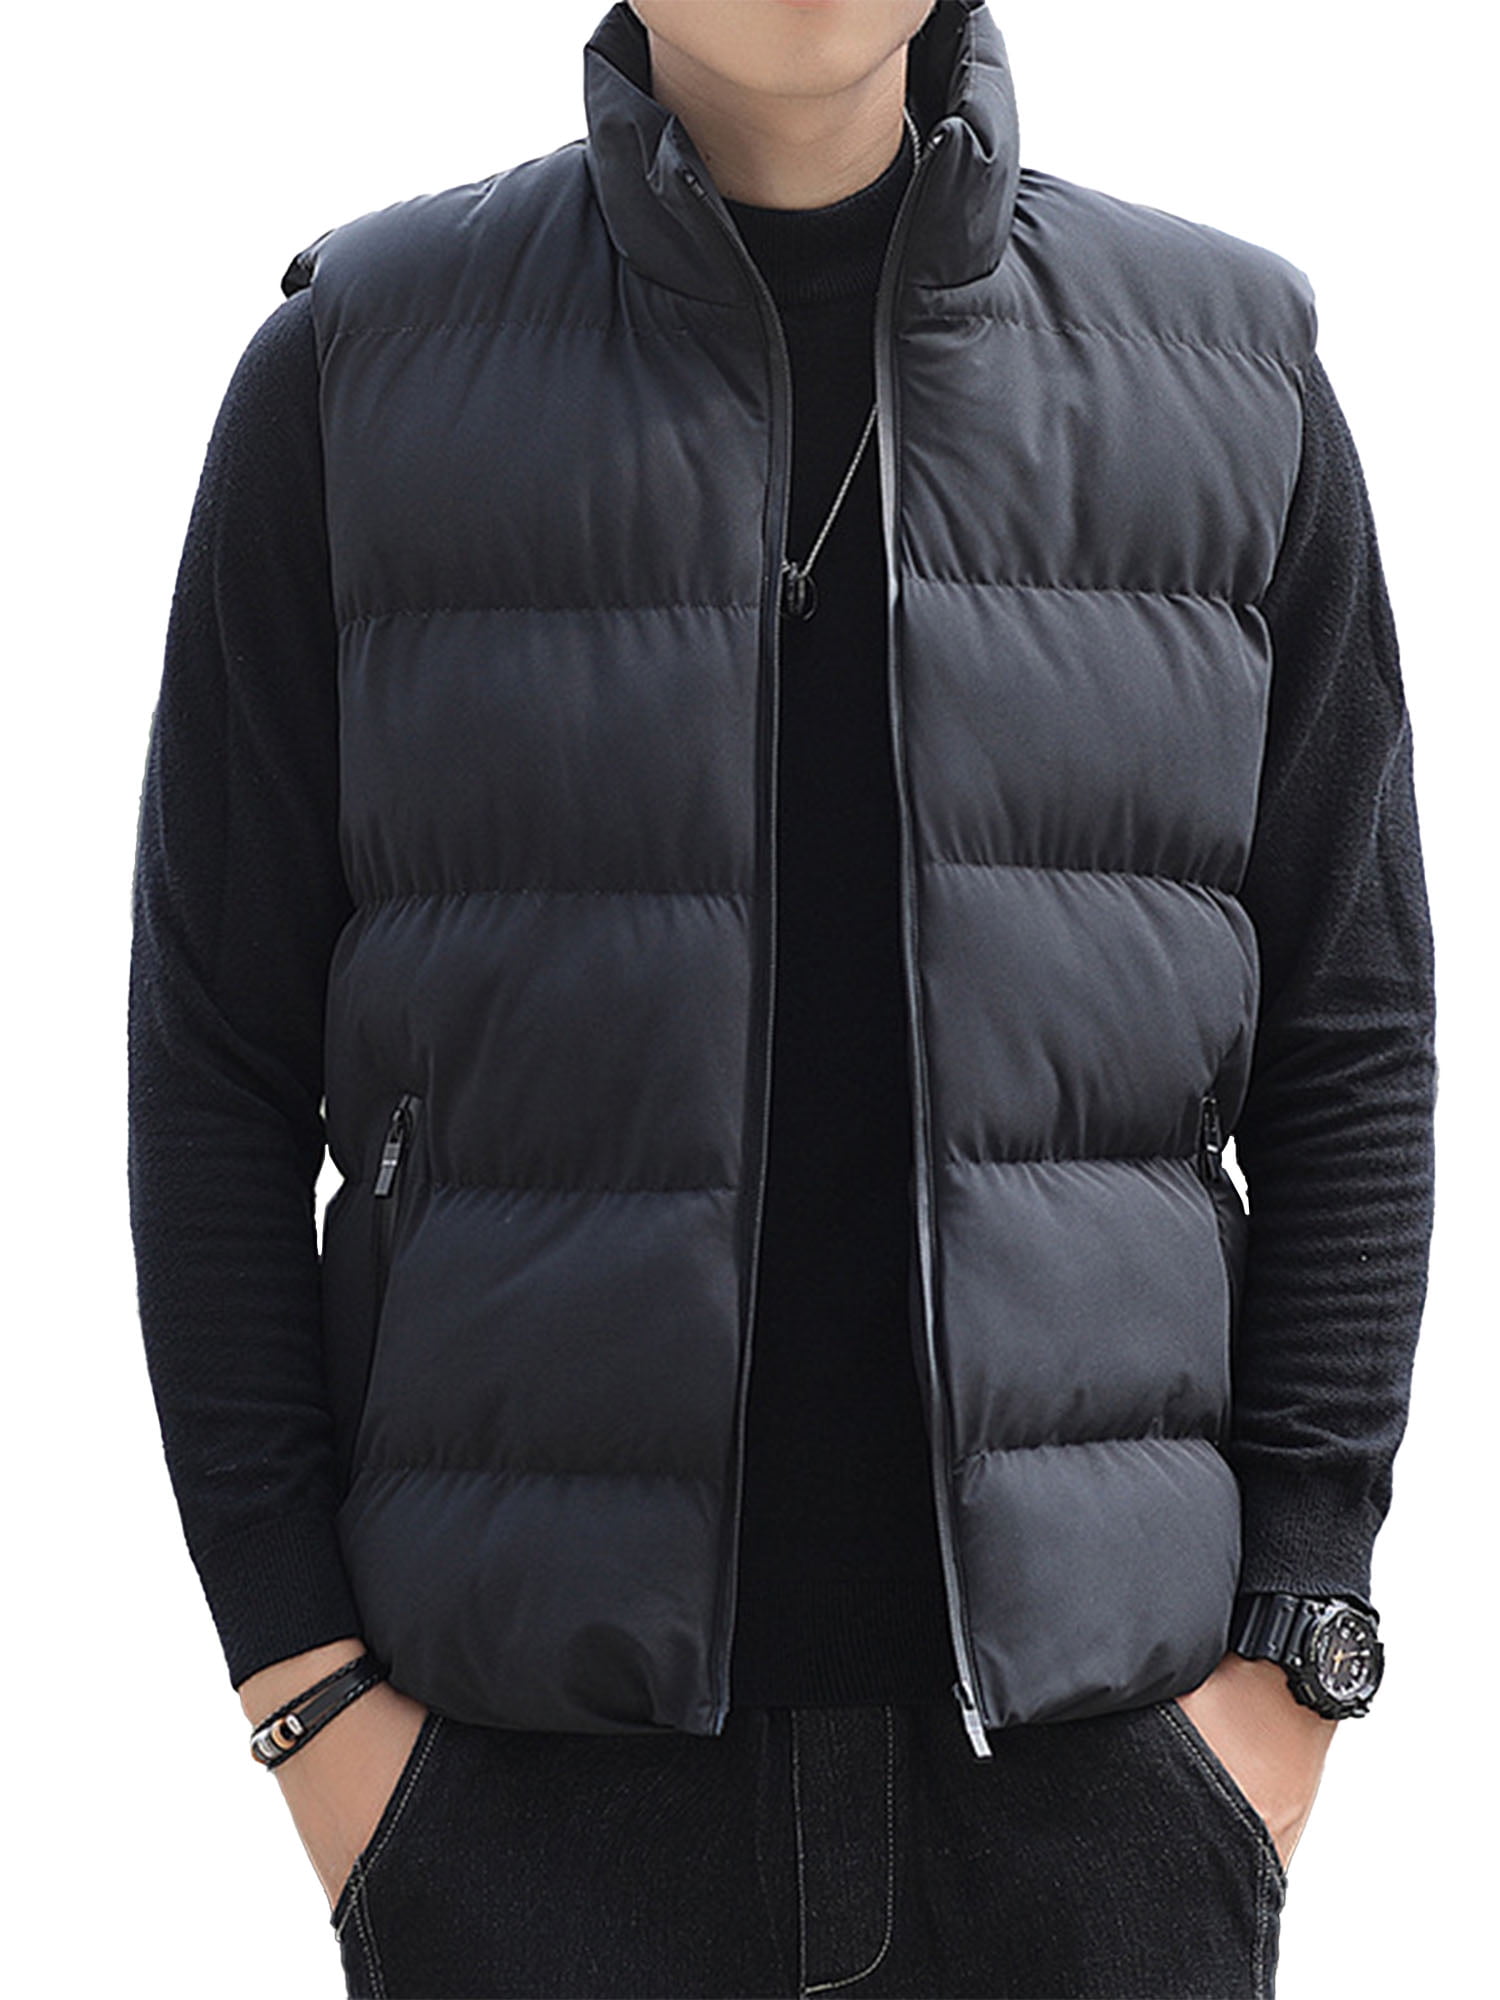 Men's Gilet Winter Zip Up Stand Collar Quilted Puffer Vest Outdoor Sleeveless Jacket 